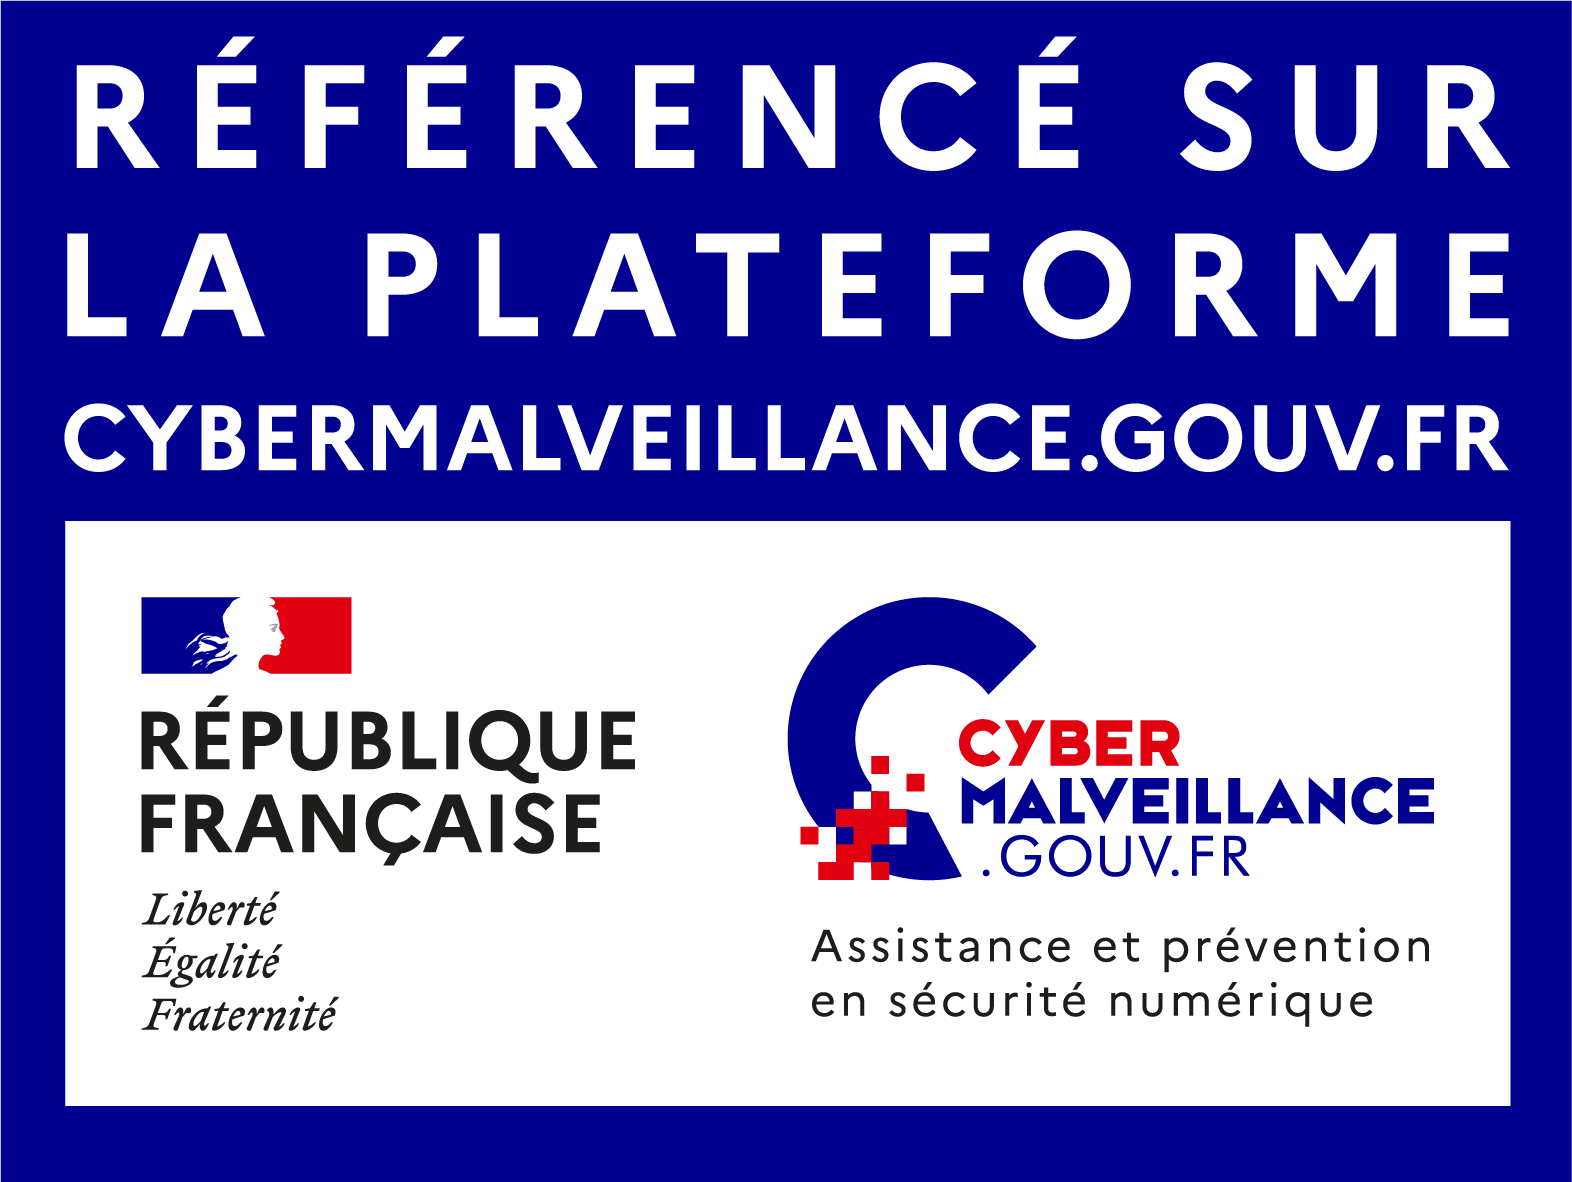 Prestataire référencé Cybermalveillance.gouv.fr